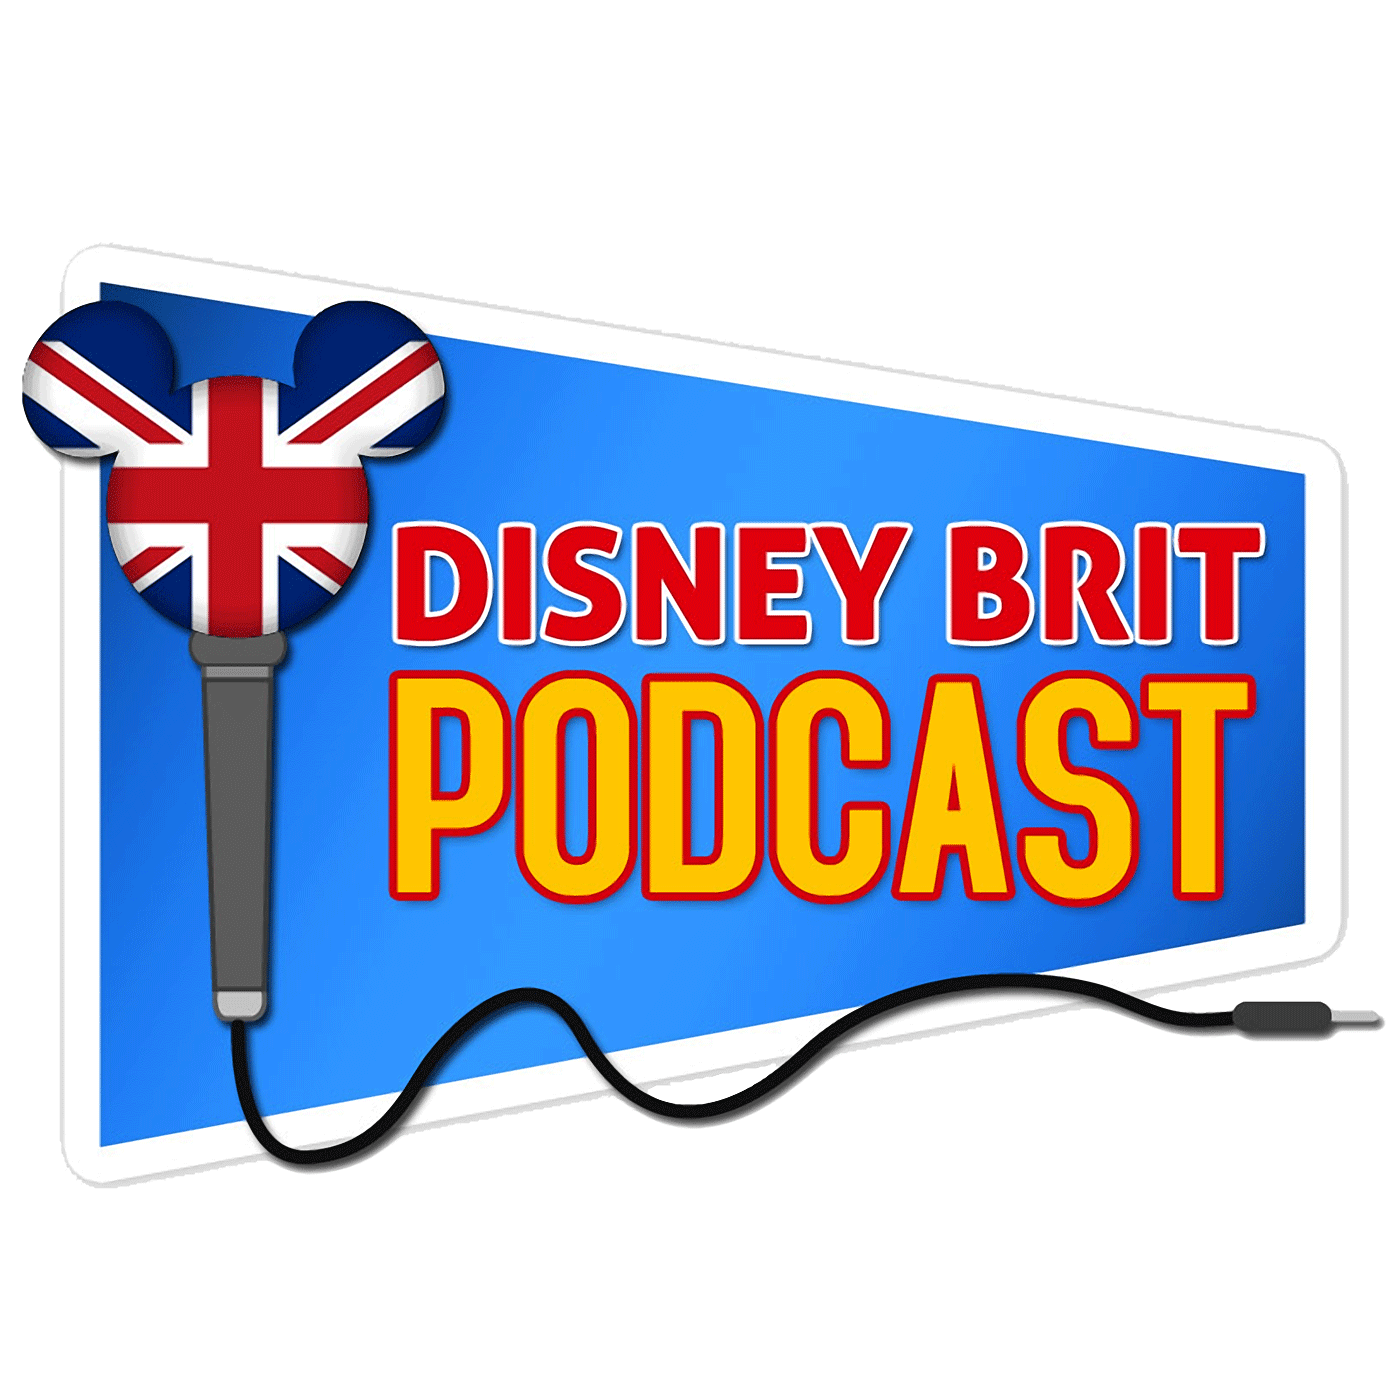 Disneybrit Podcast - Episode 120